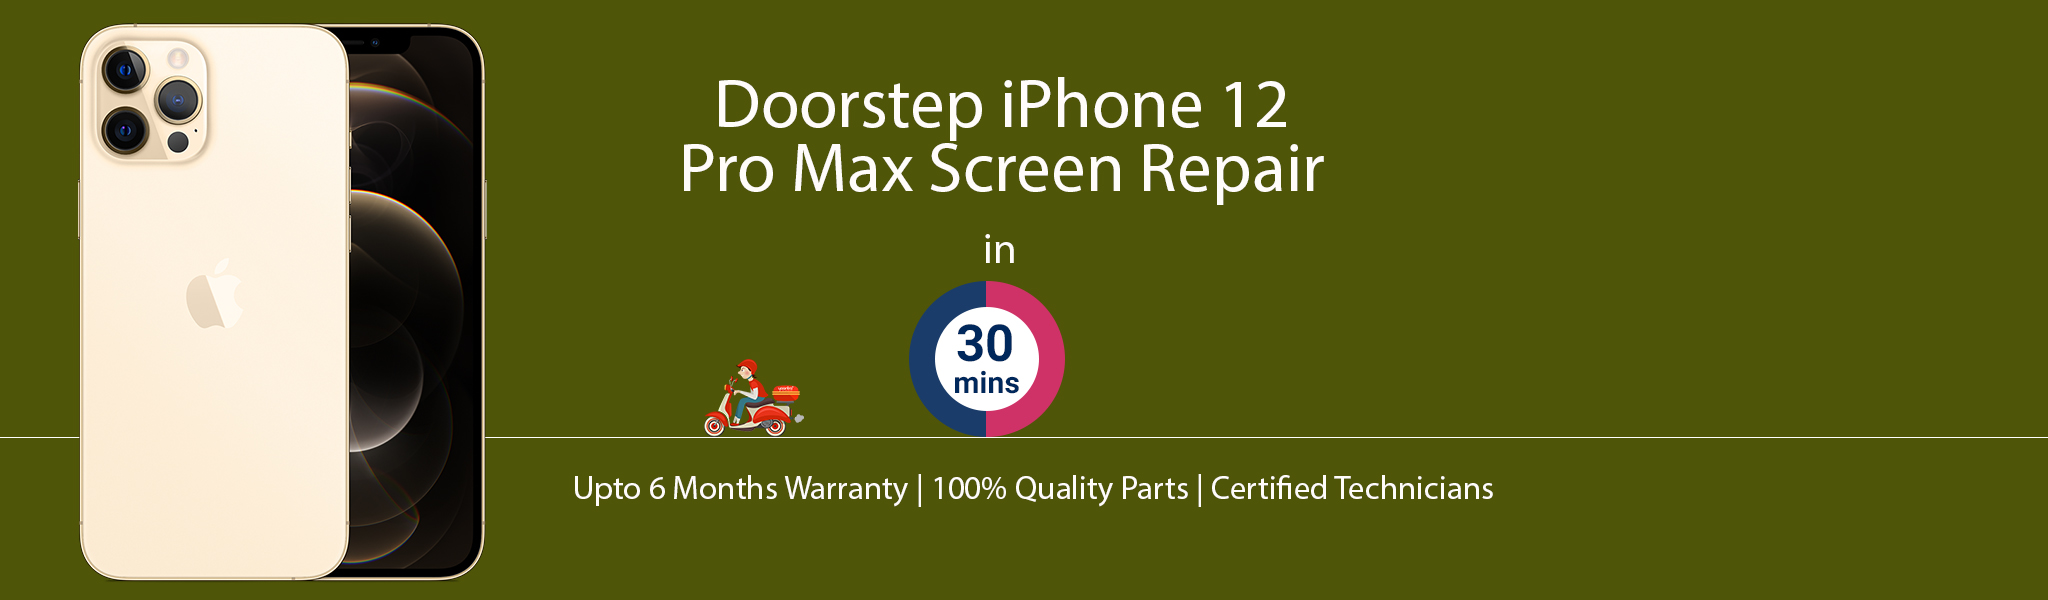 iphone-12-pro-max-screen-repair.jpg